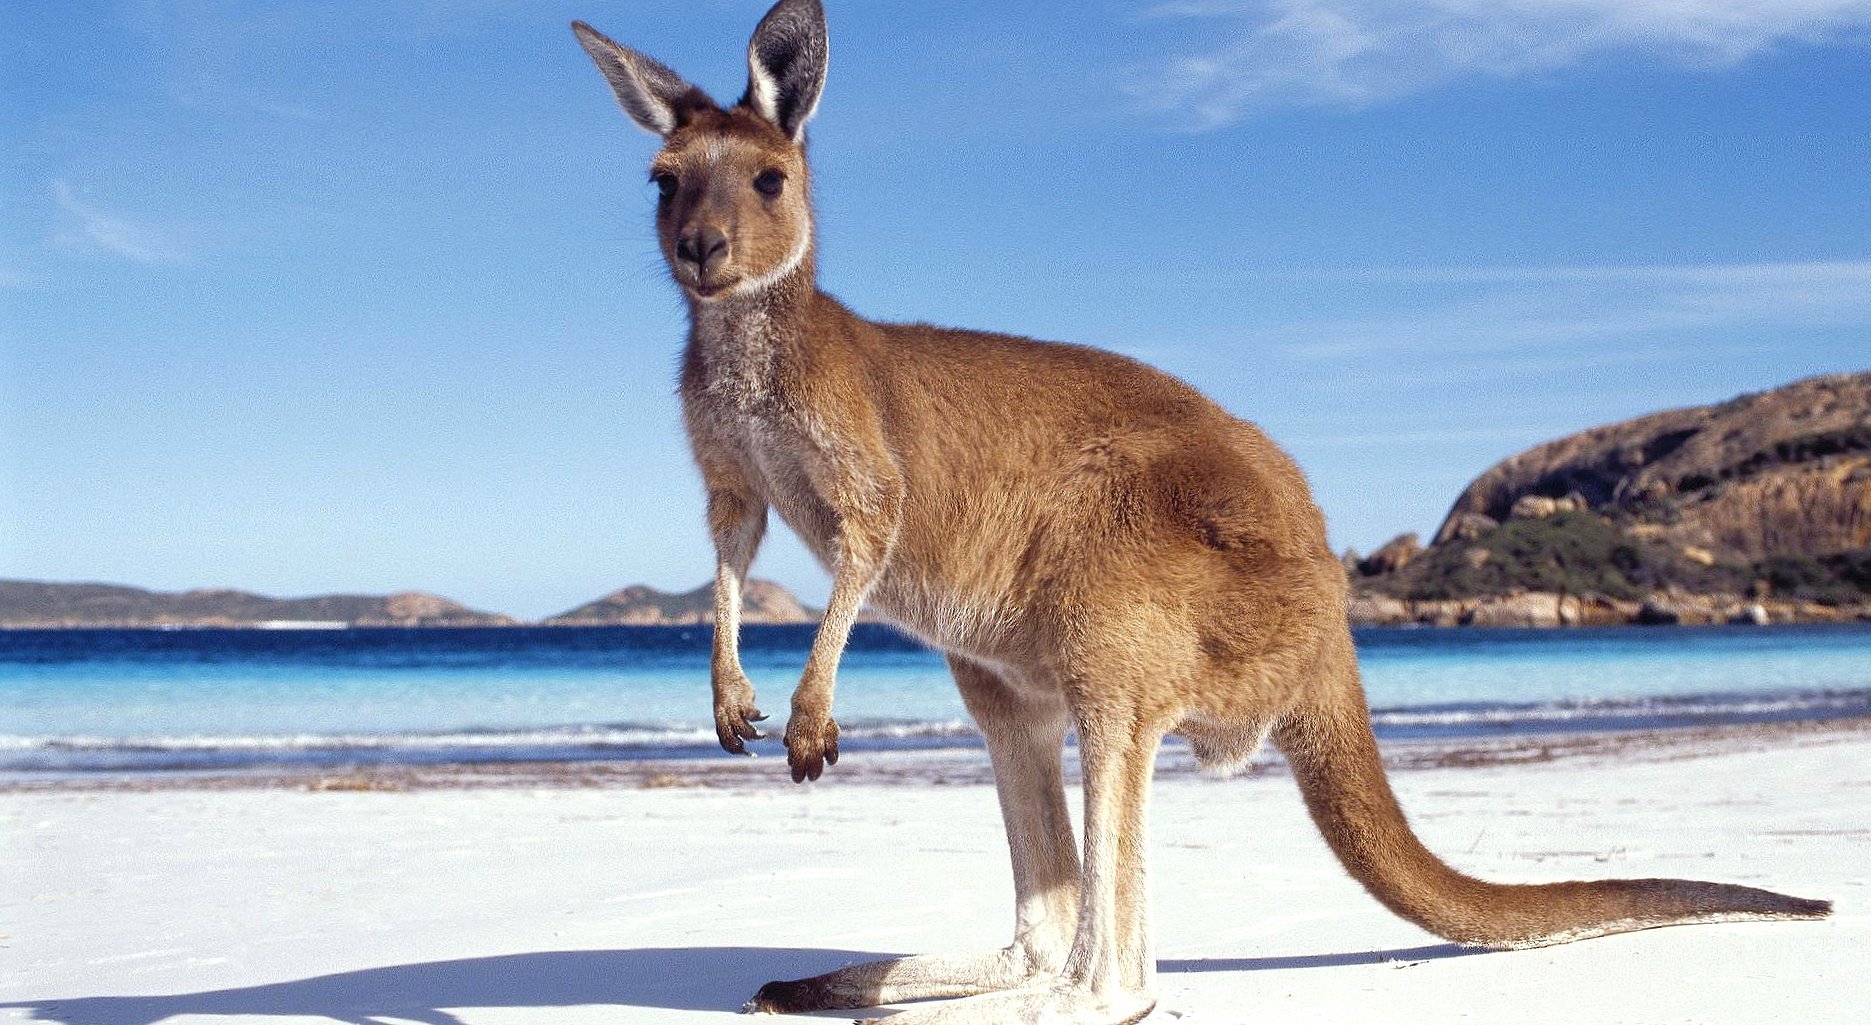 Beach kangaroo at 1280 x 960 size wallpapers HD quality